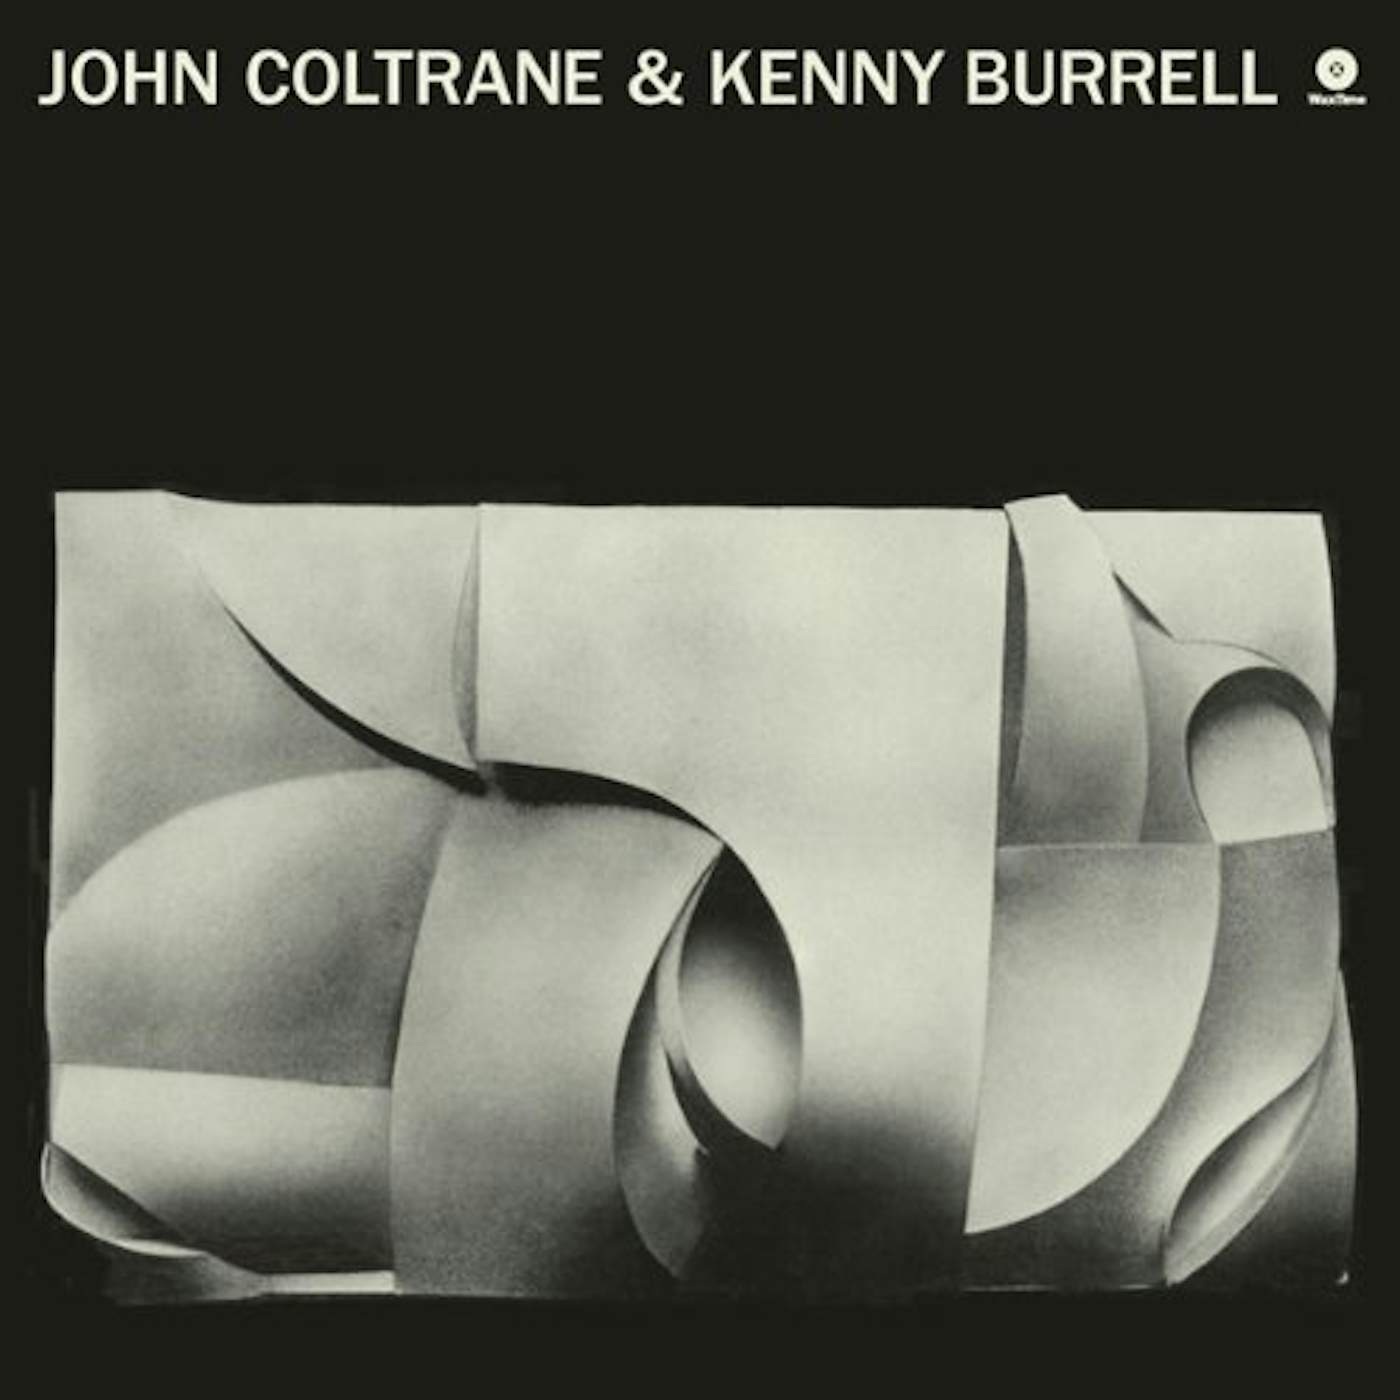 JOHN COLTRANE & KENNY BURRELL (BONUS TRACK) Vinyl Record - 180 Gram Pressing